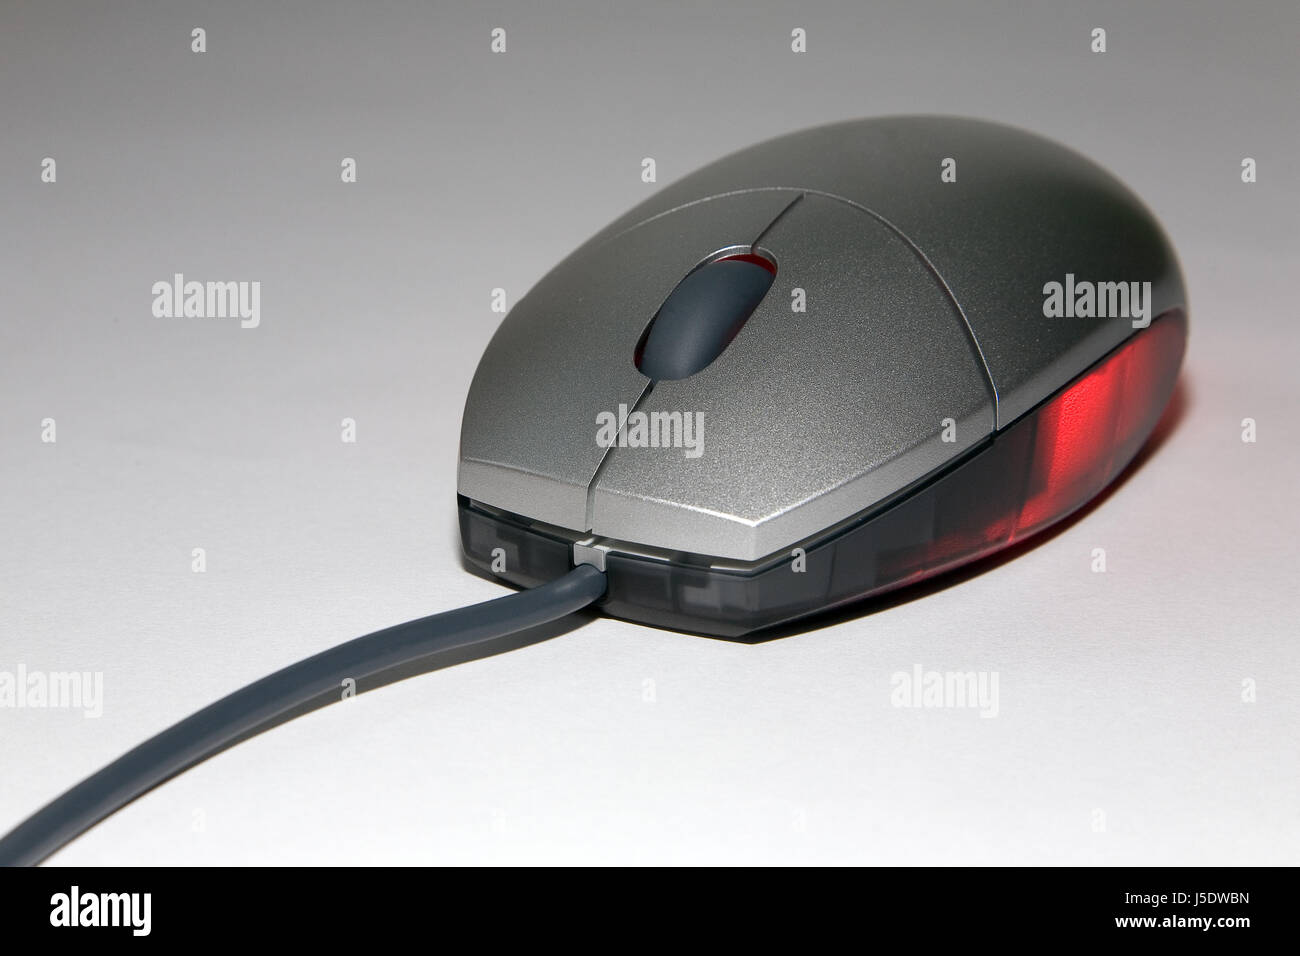 input device sensor mouse computer mouse optical mouse usb optical laser  mouse Stock Photo - Alamy